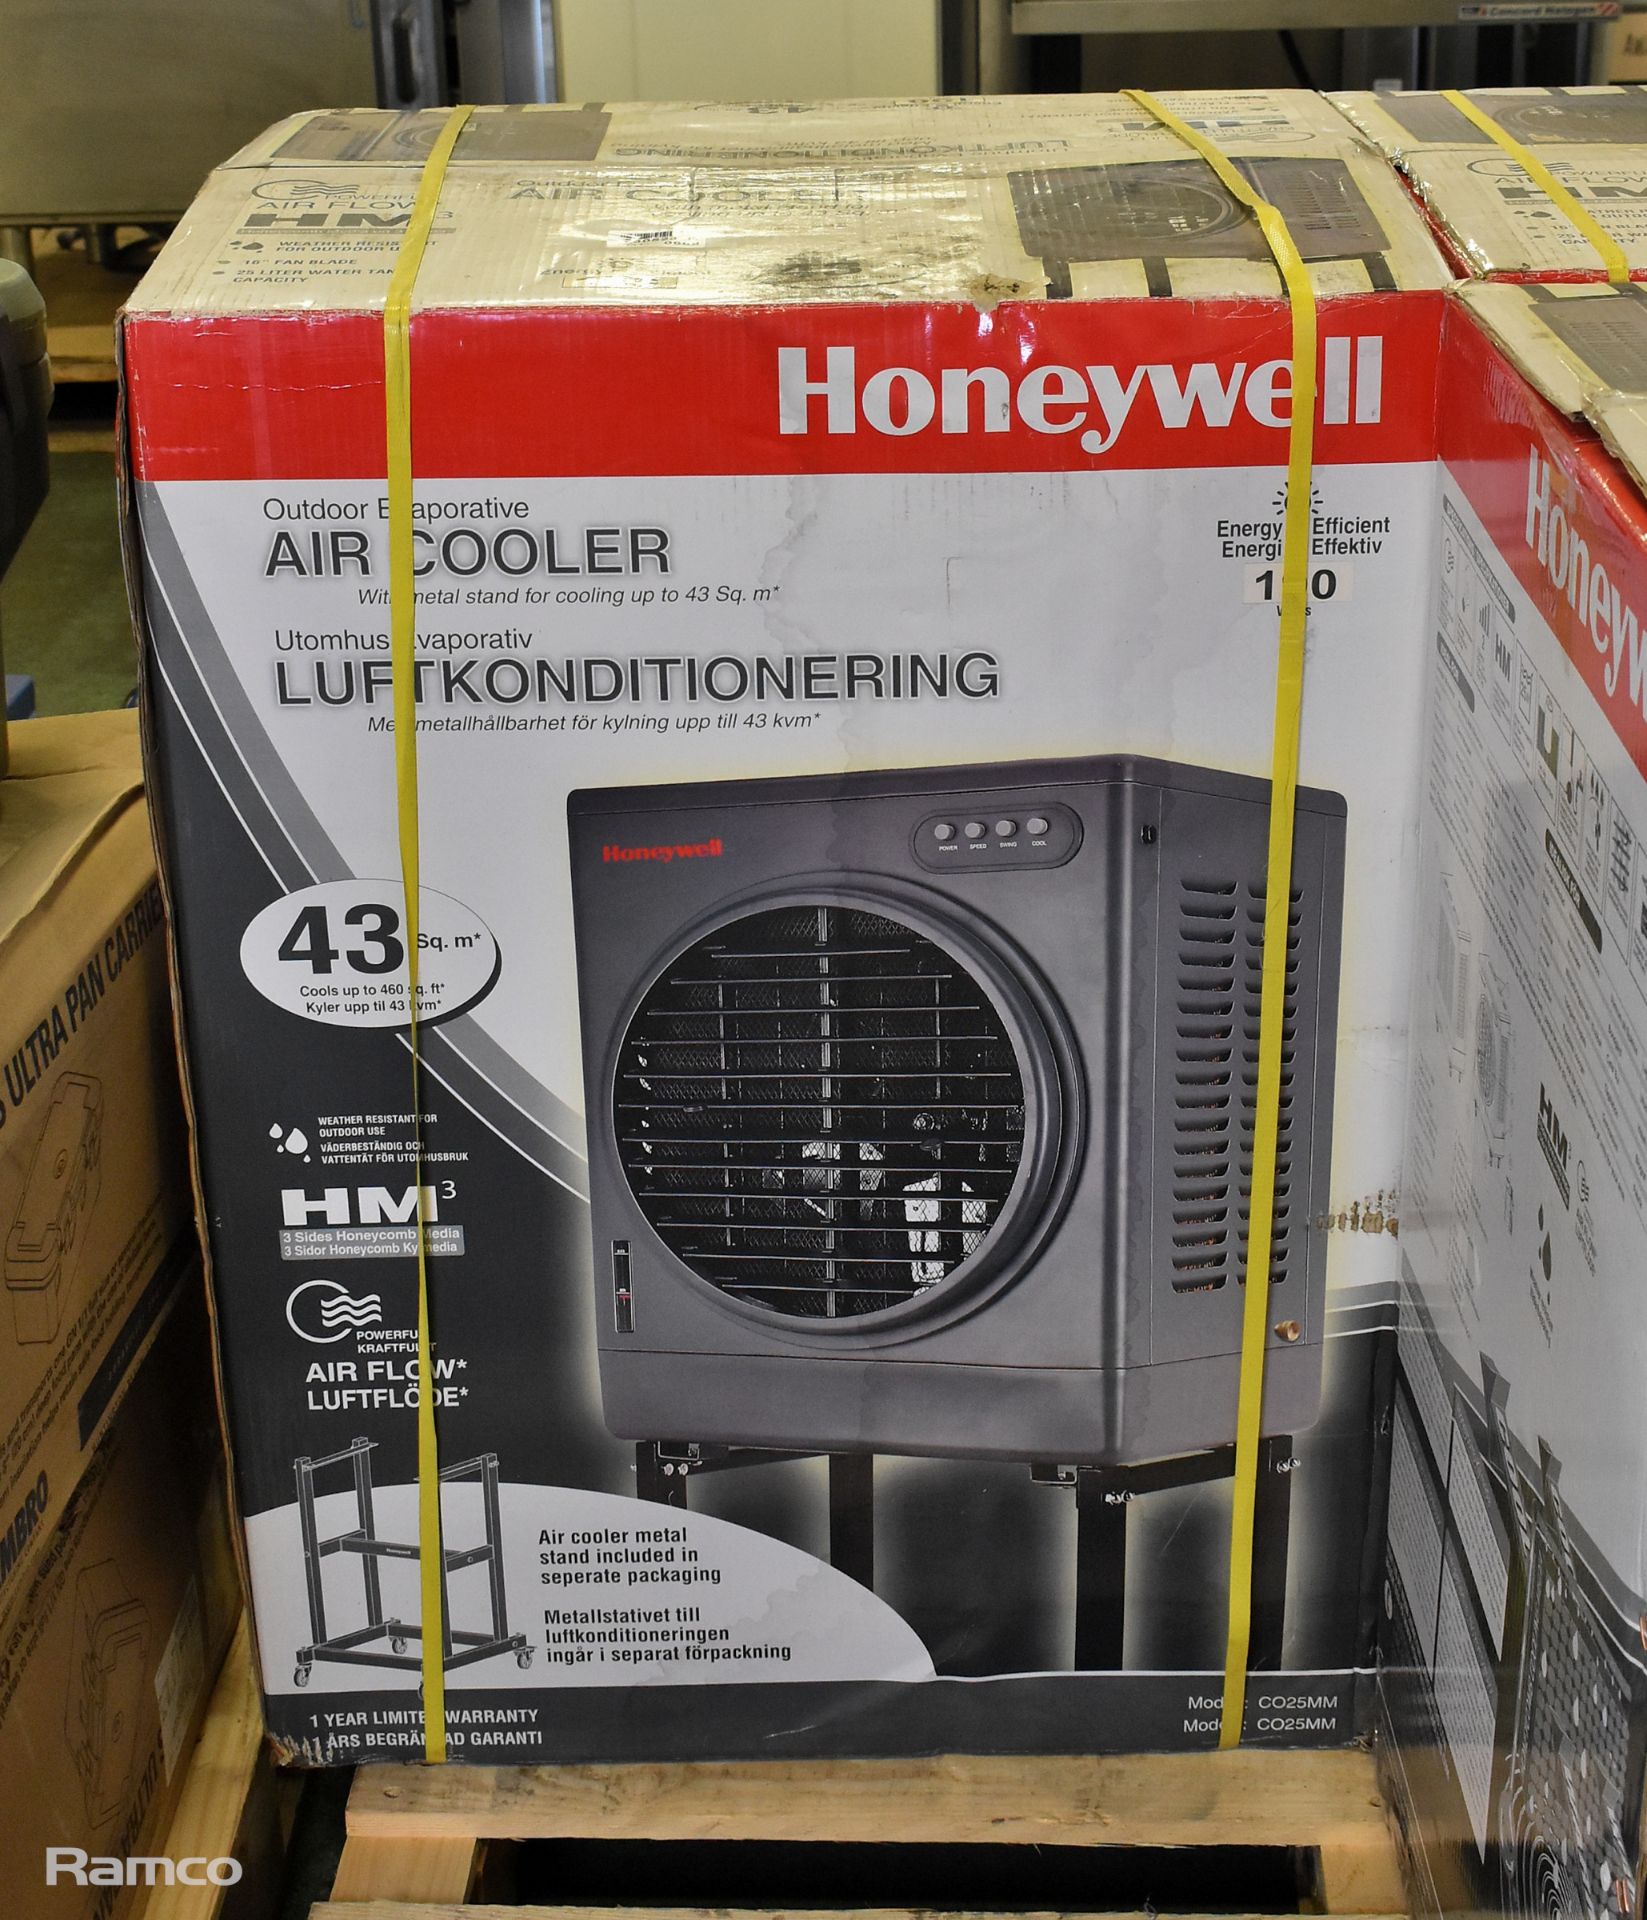 Honeywell CO25MM Evaporative Air Cooler - 190W - 220-240V - 50hz - Image 2 of 2